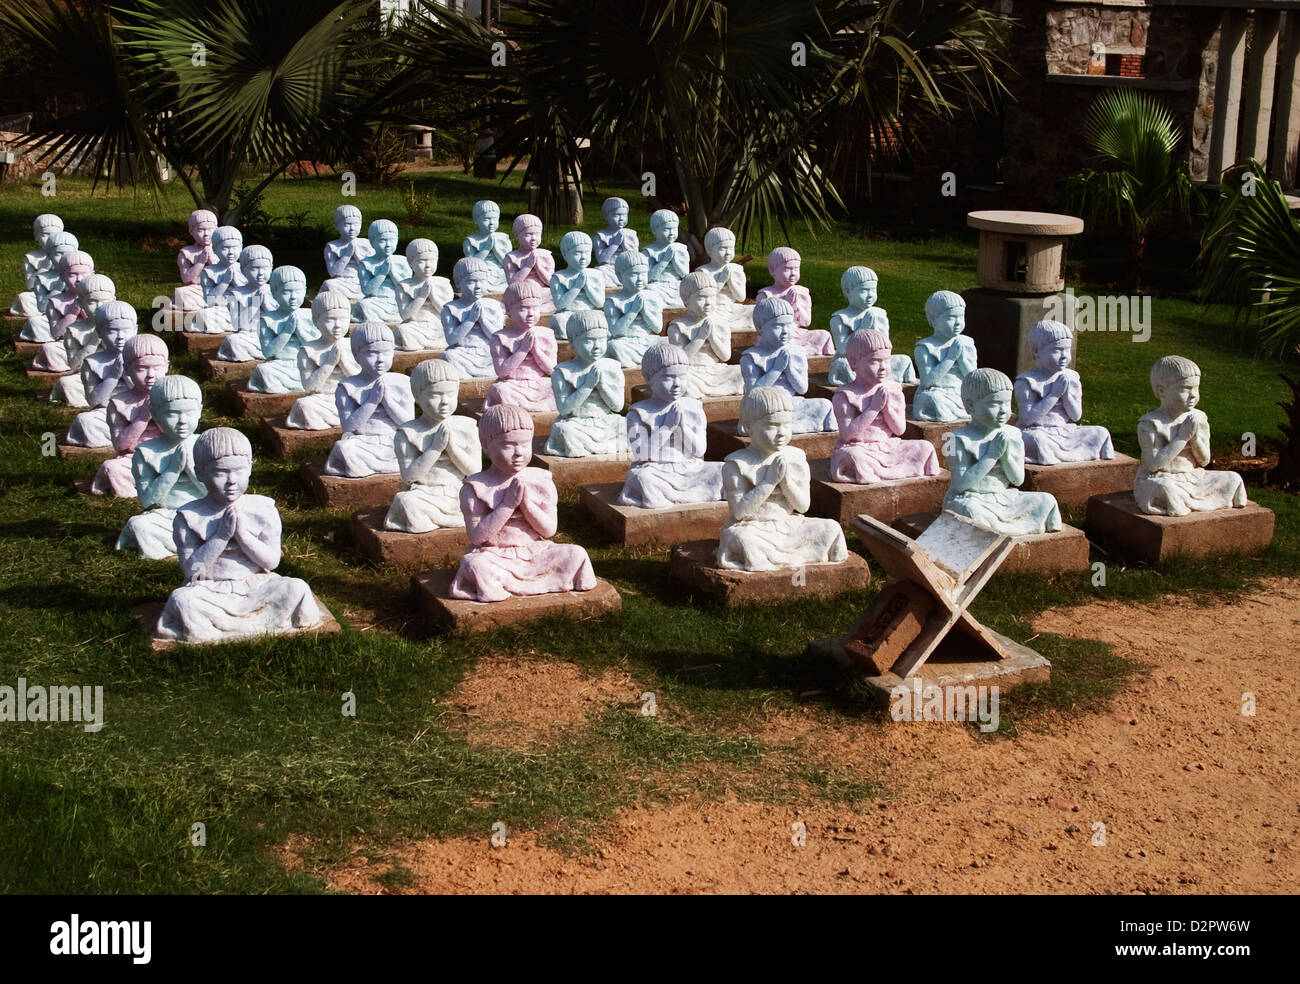 Statues of students studying, Garden of Five Senses, Saidul Ajaib, New Delhi, India Stock Photo